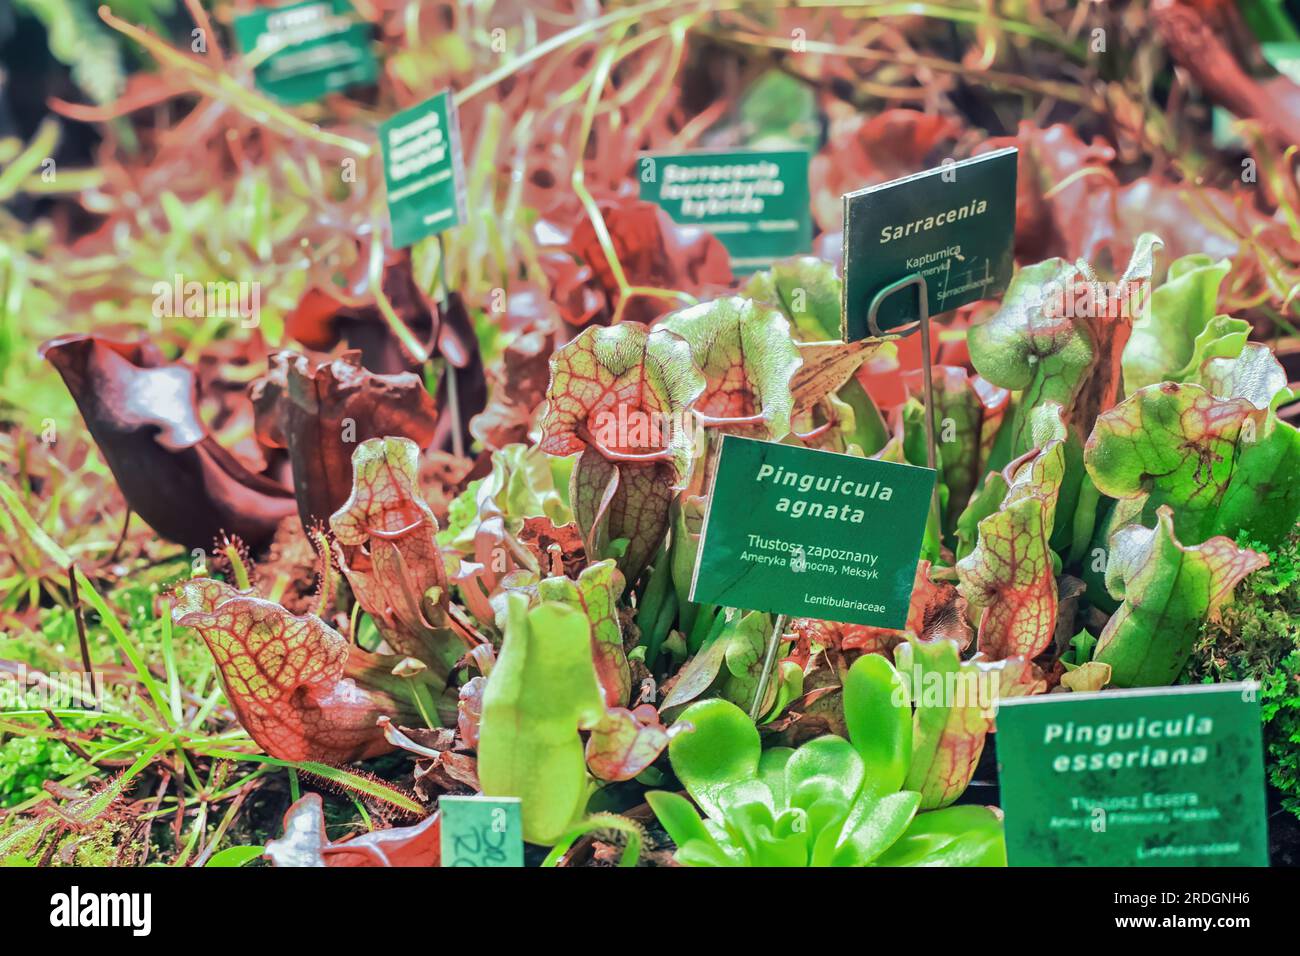 Various plants grow in botanical garden. Different carnivorous red, green pitcher plant. Sarracenia, Pinguicula agnata, Pinguicula esseriana flowers g Stock Photo